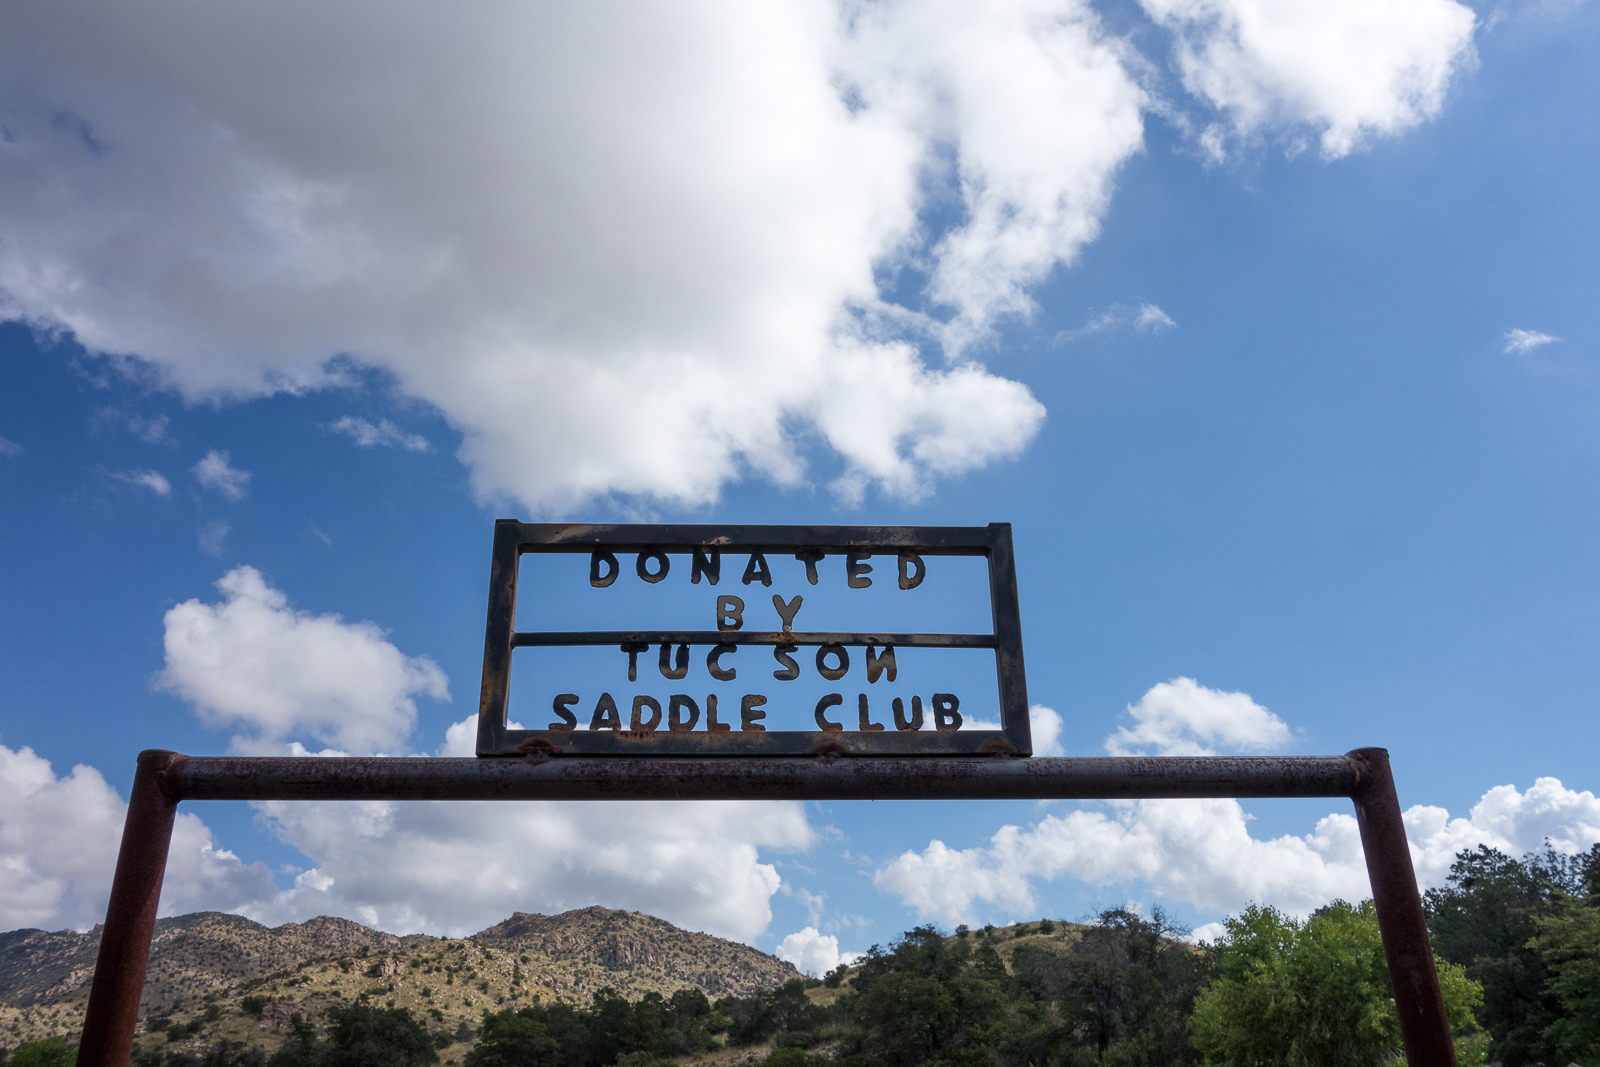 'Tucson Saddle Club'. October 2015.